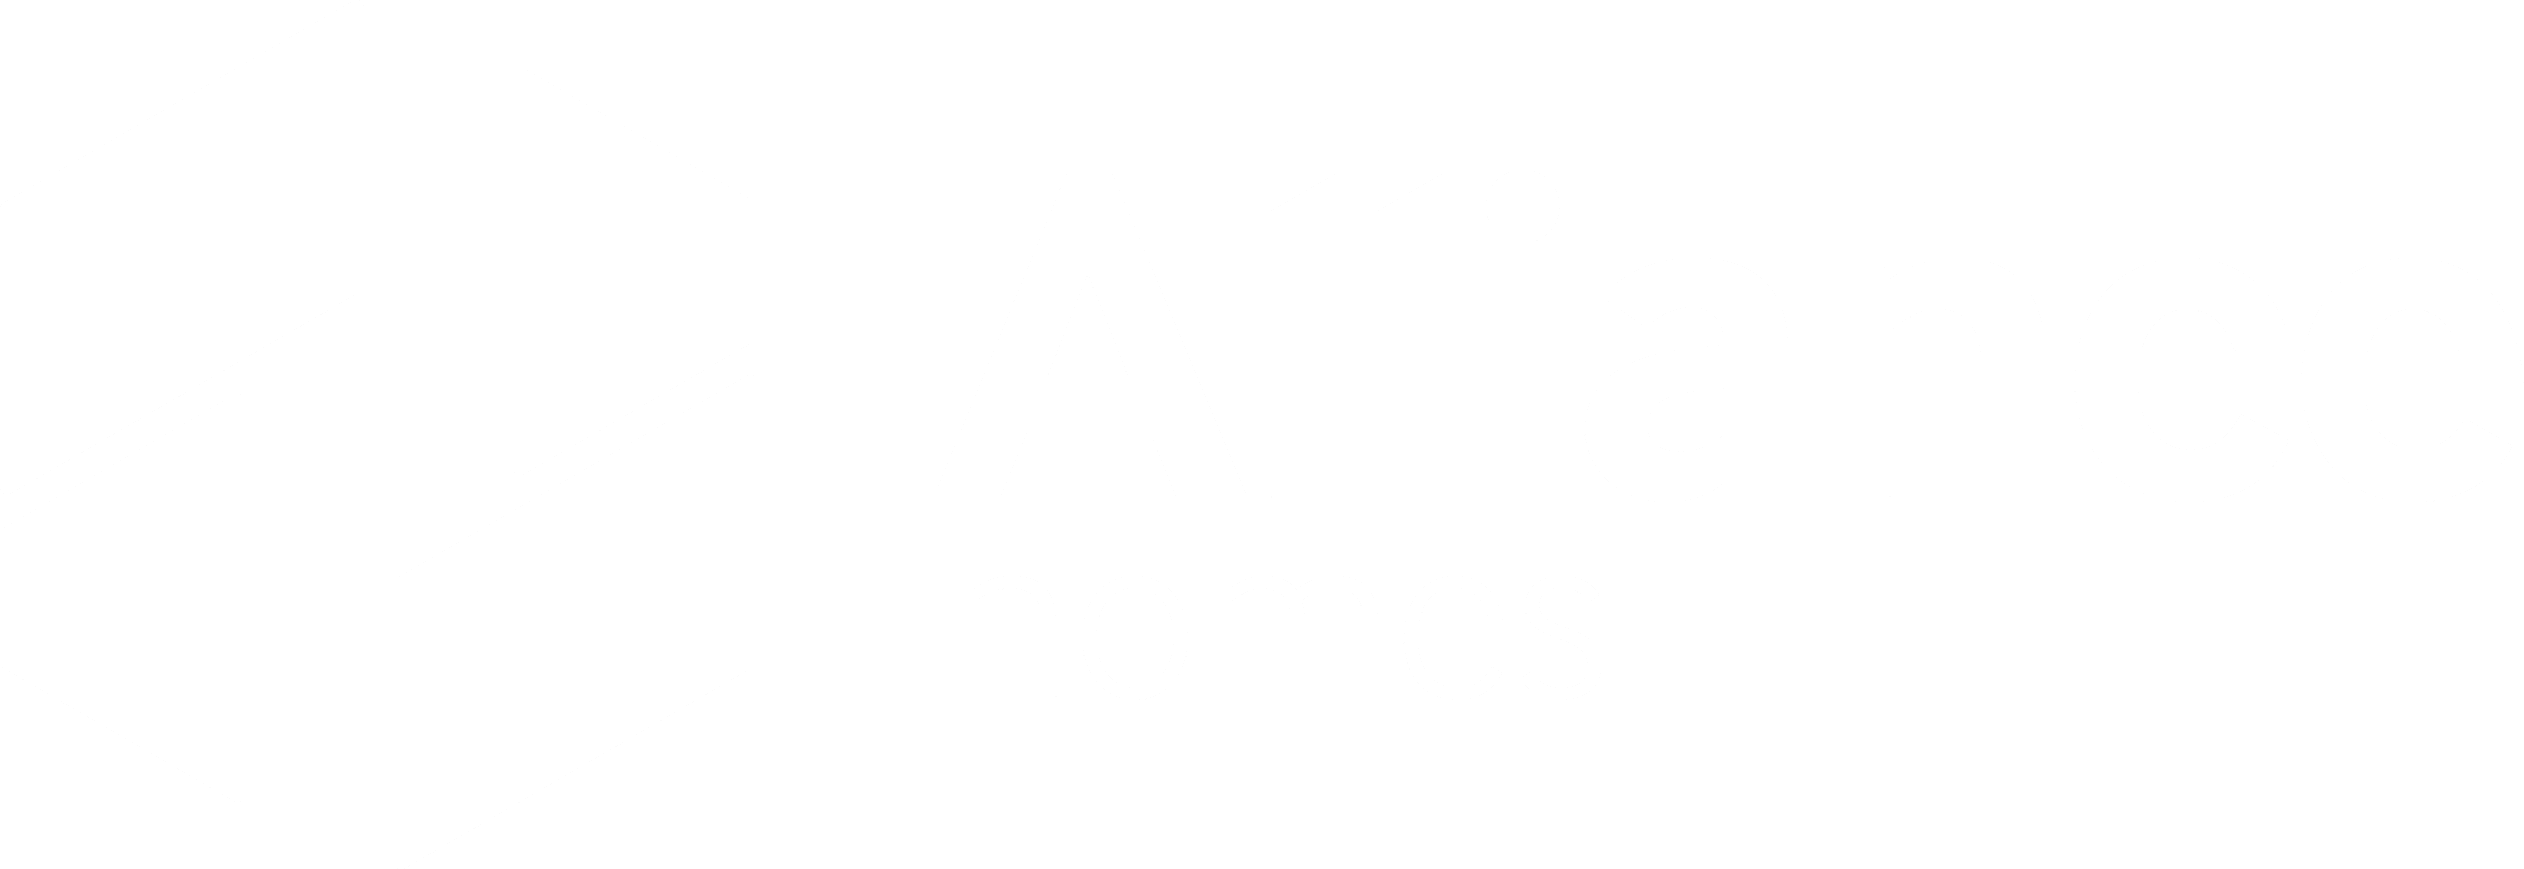 Alliance Homes